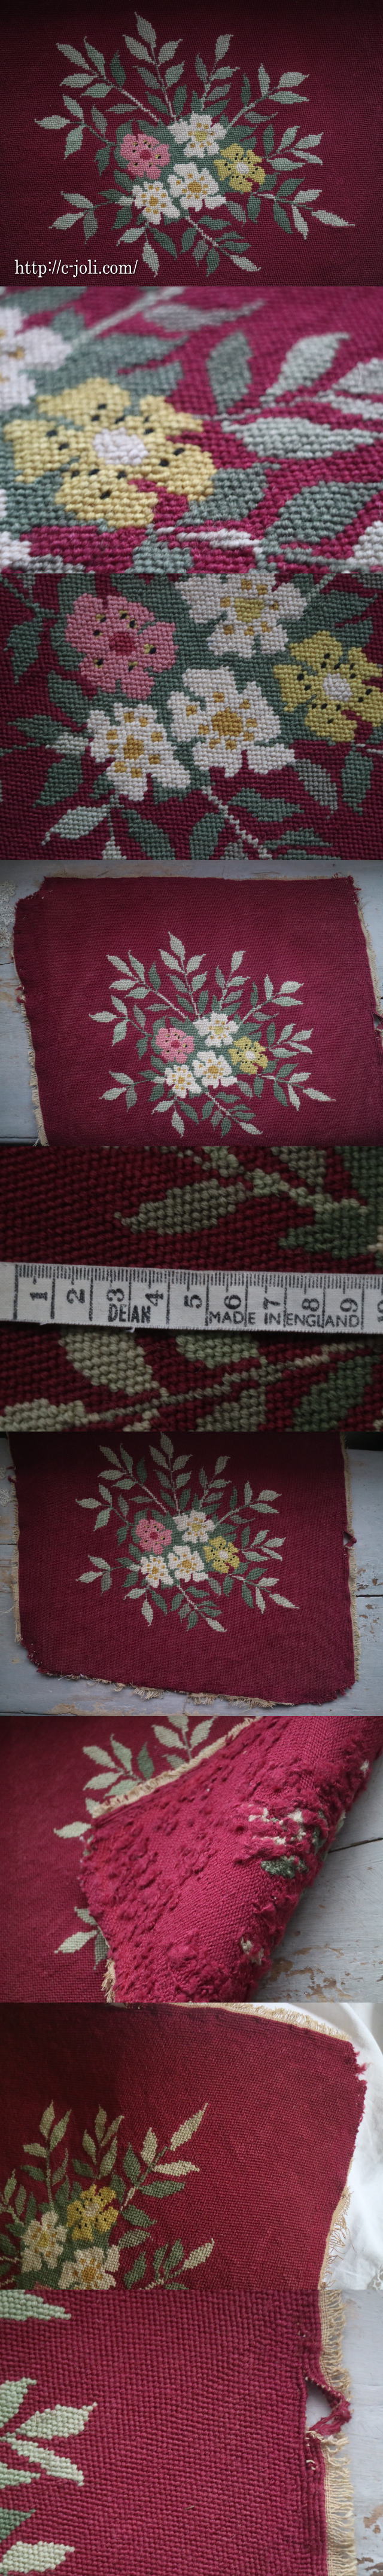 L2188 イギリスアンティーク刺繍 花柄ミディポワン手刺繍クロス 50x47cm